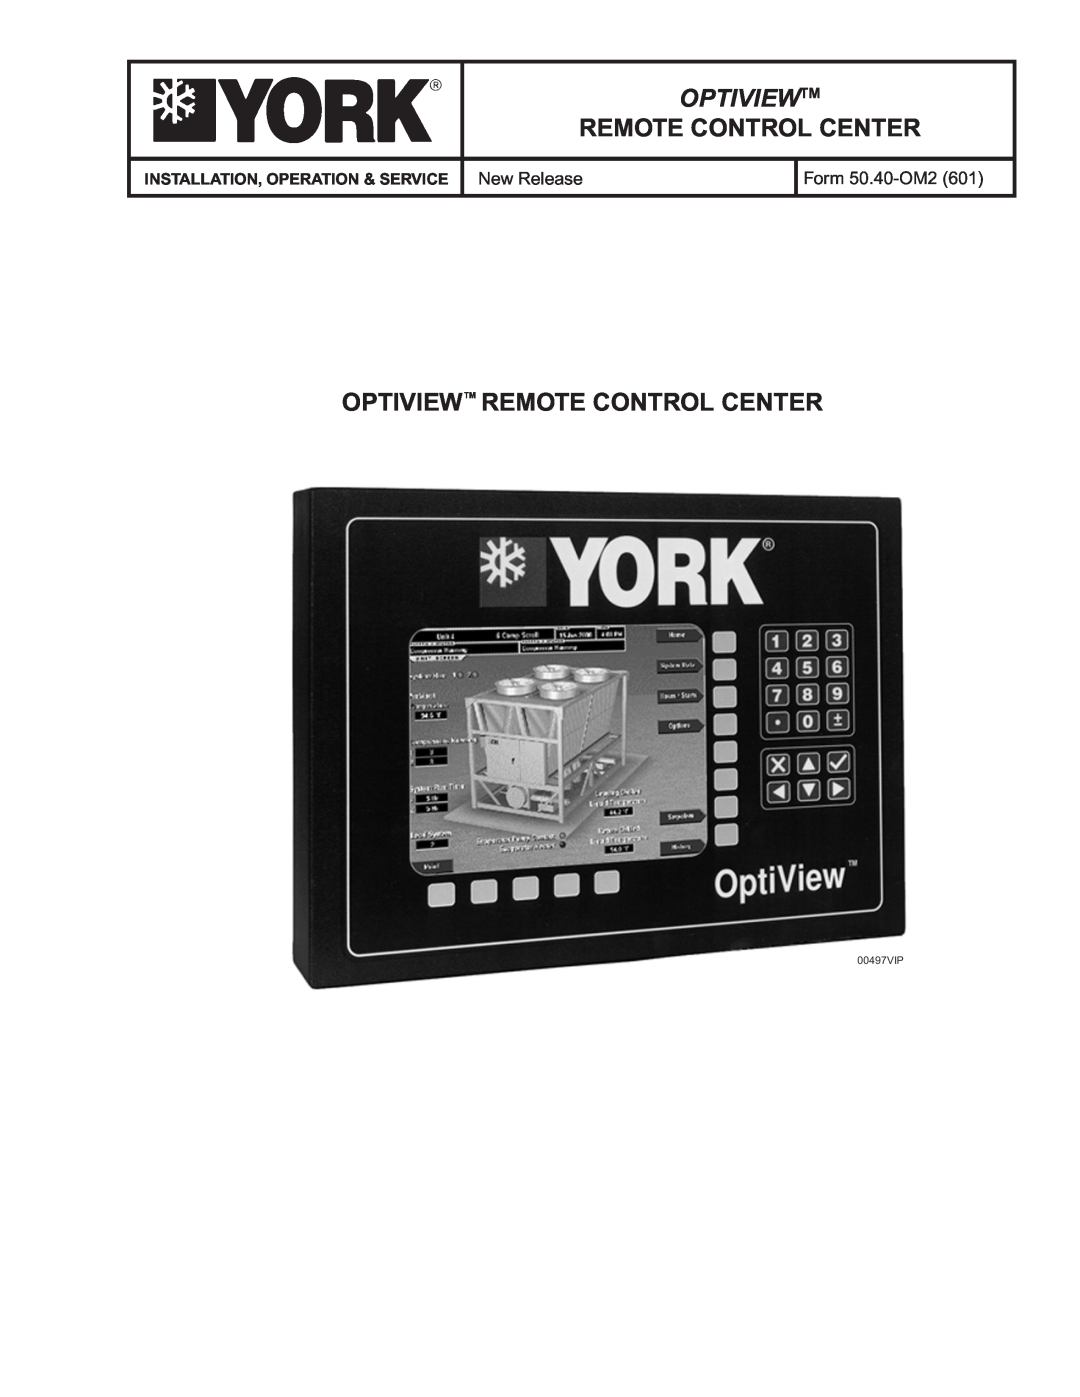 York 00497VIP manual Optiview Remote Control Center, Optiviewtm, New Release, Form 50.40-OM2601 